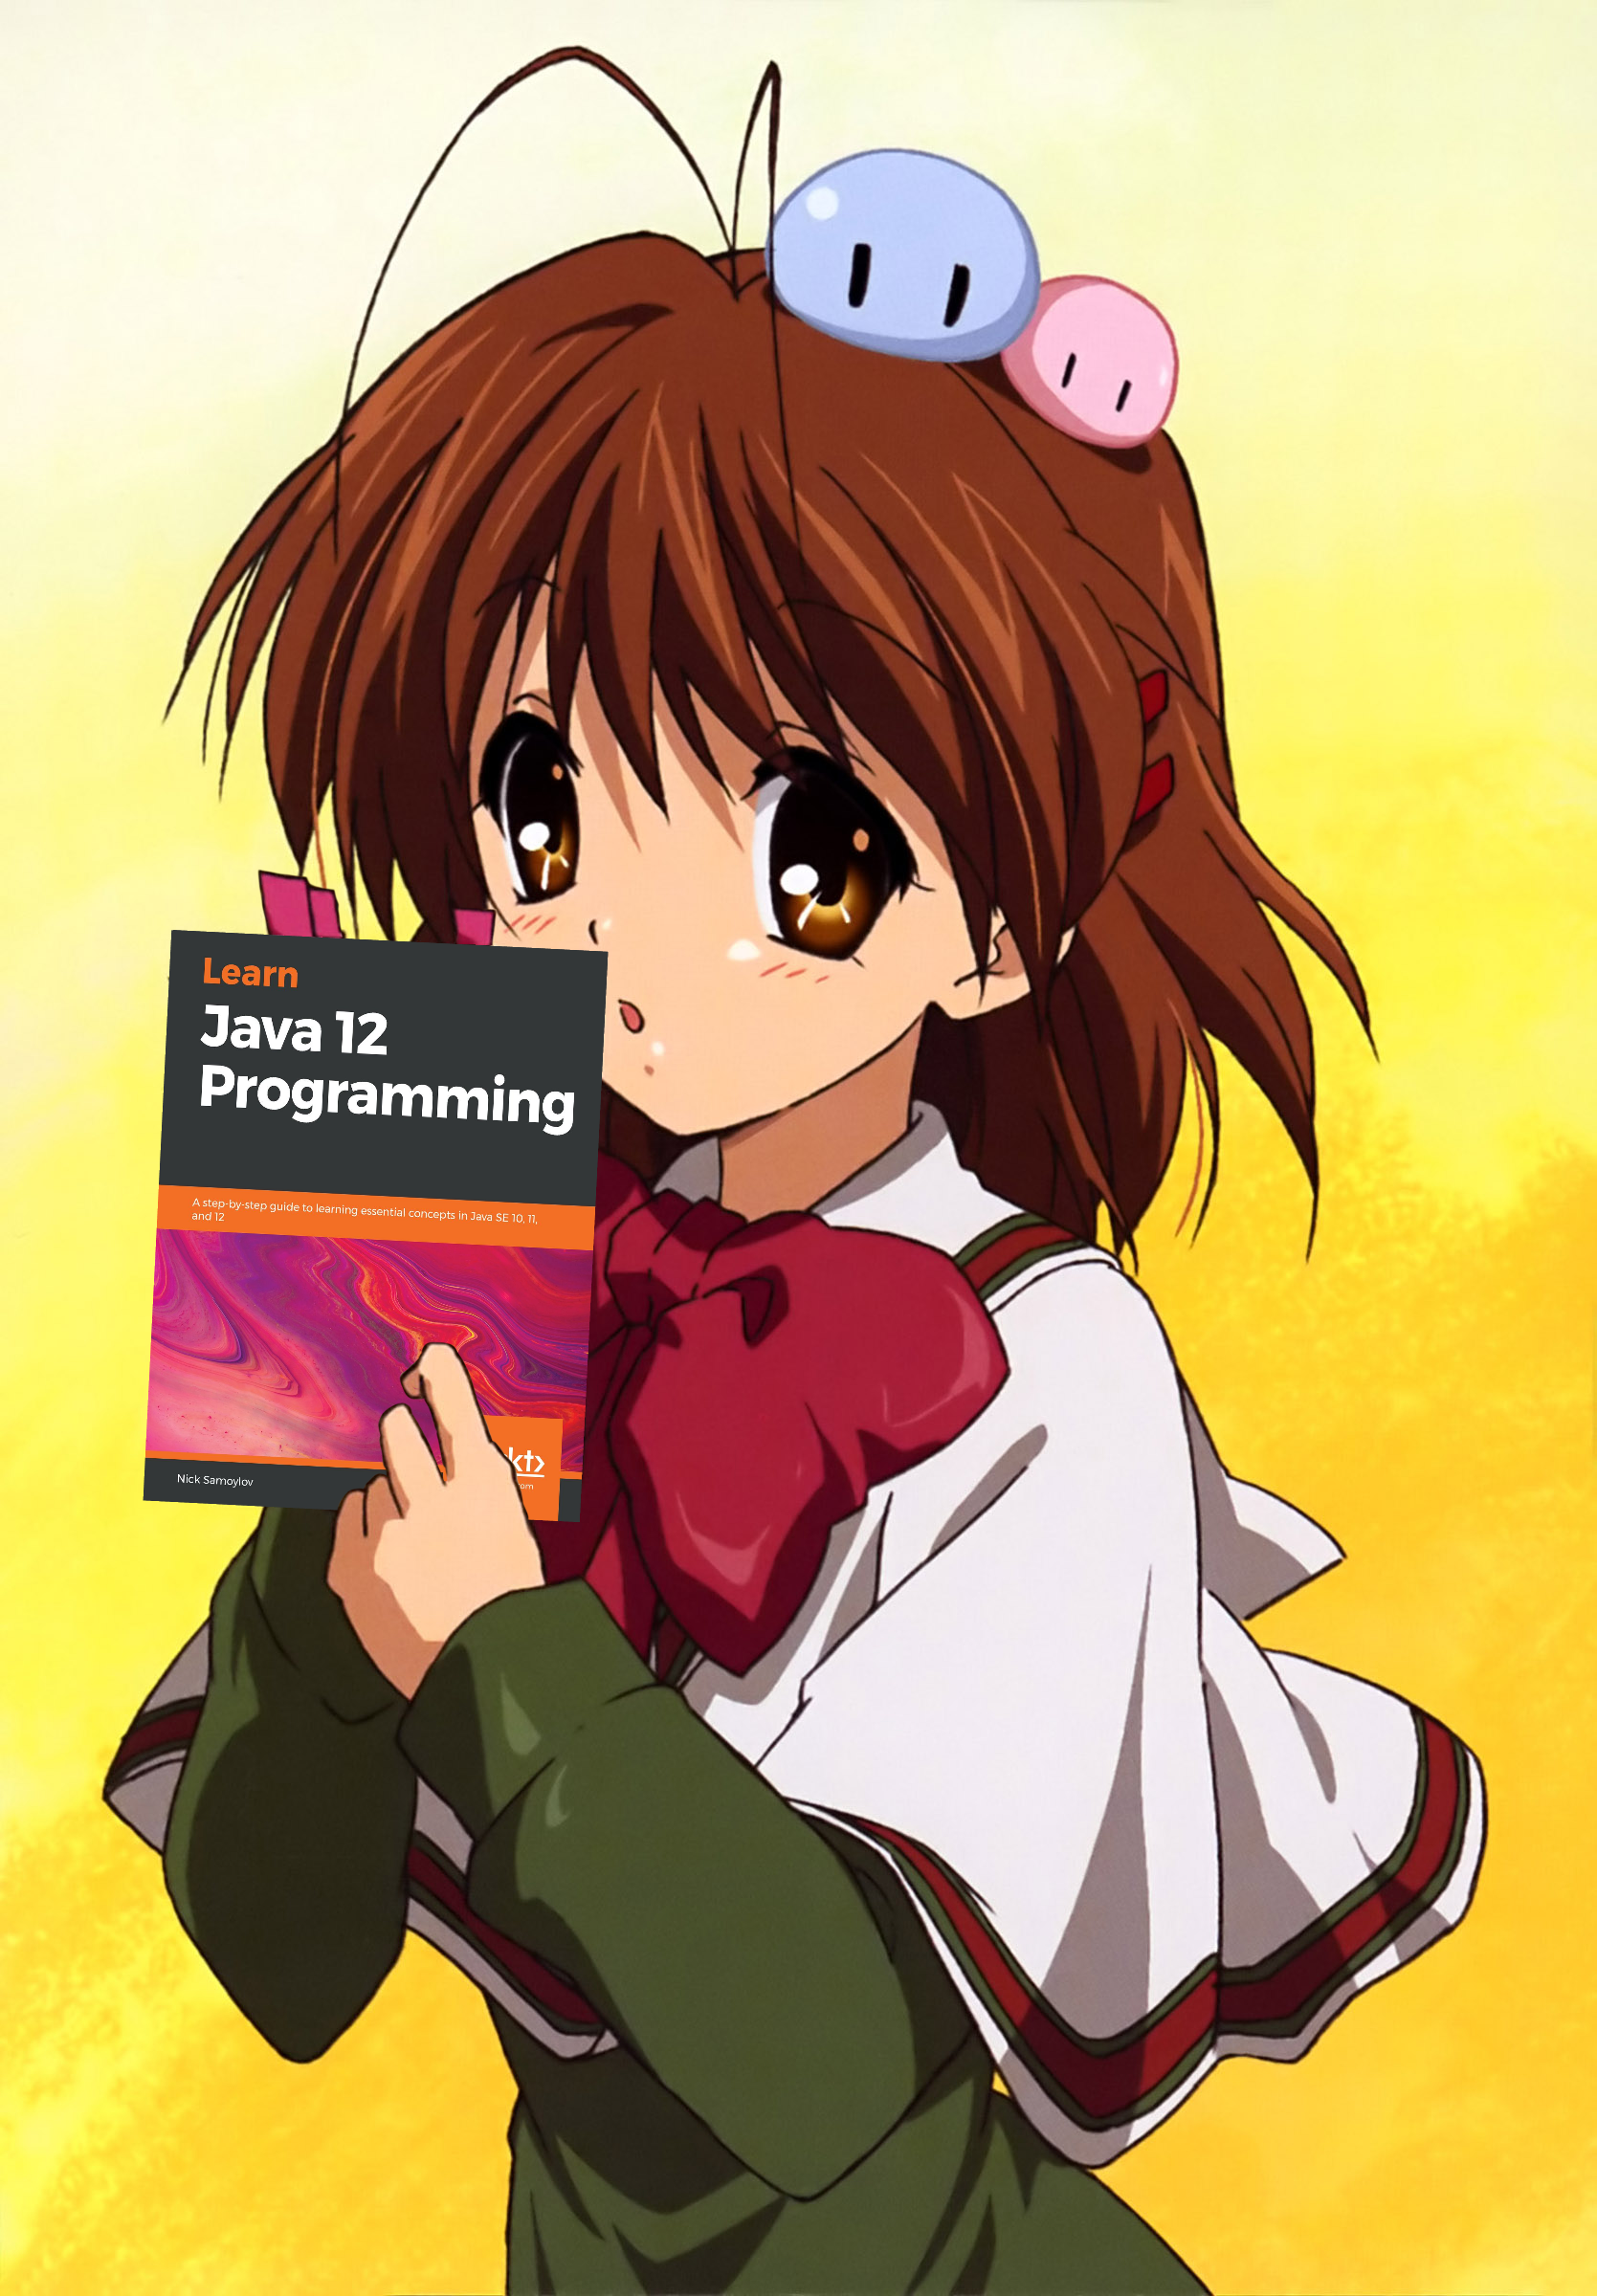 Redhead Anime Programming Girl V 1.03